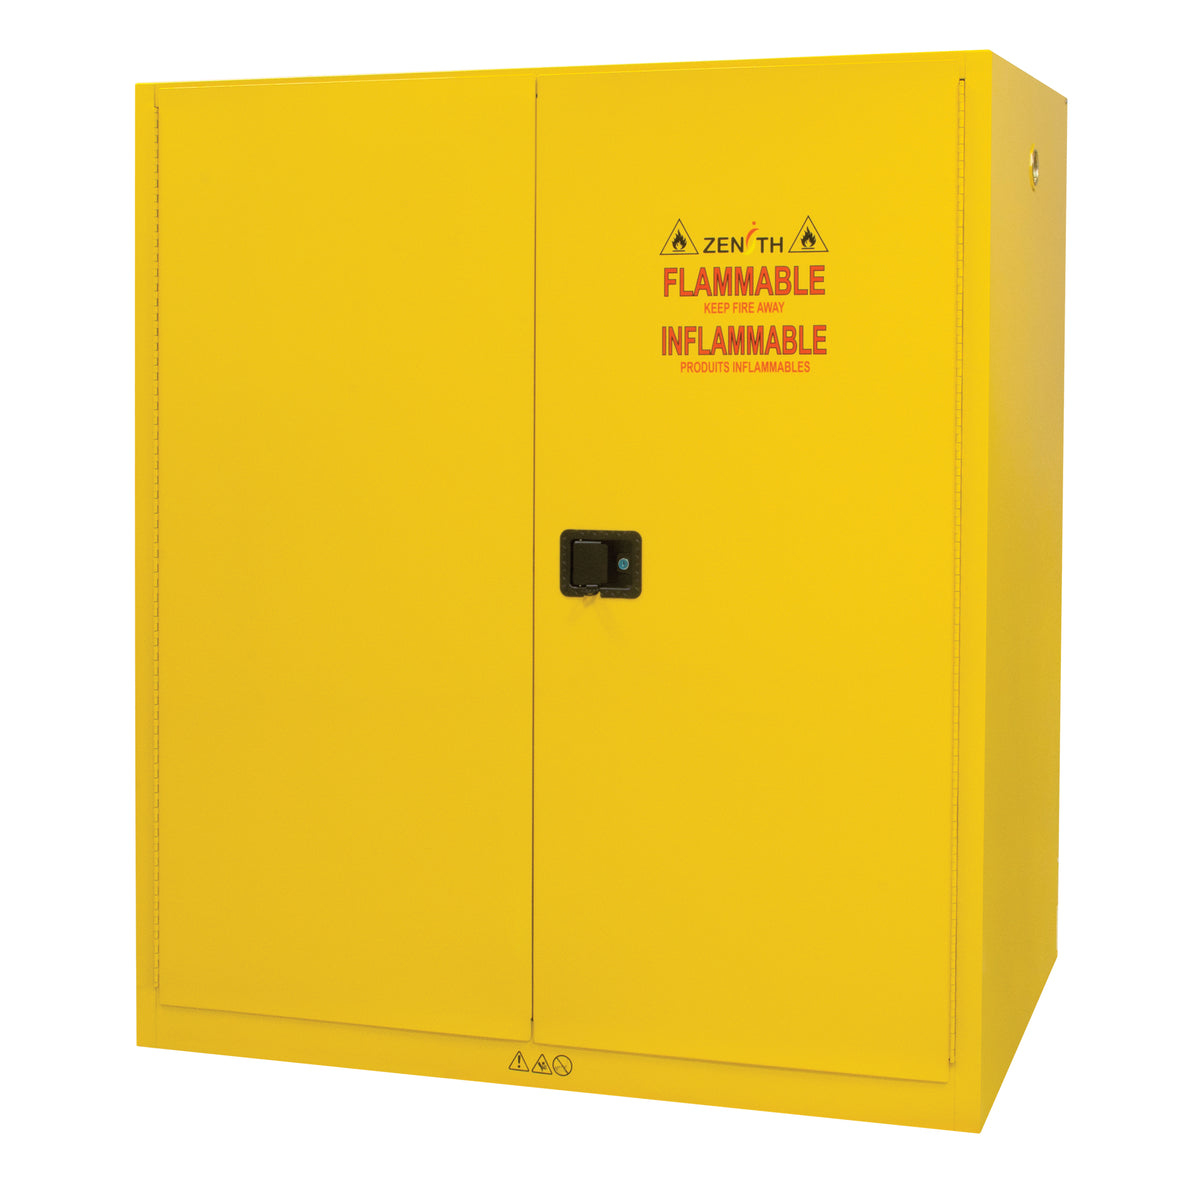 Vertical Drum Flammable Storage Cabinet